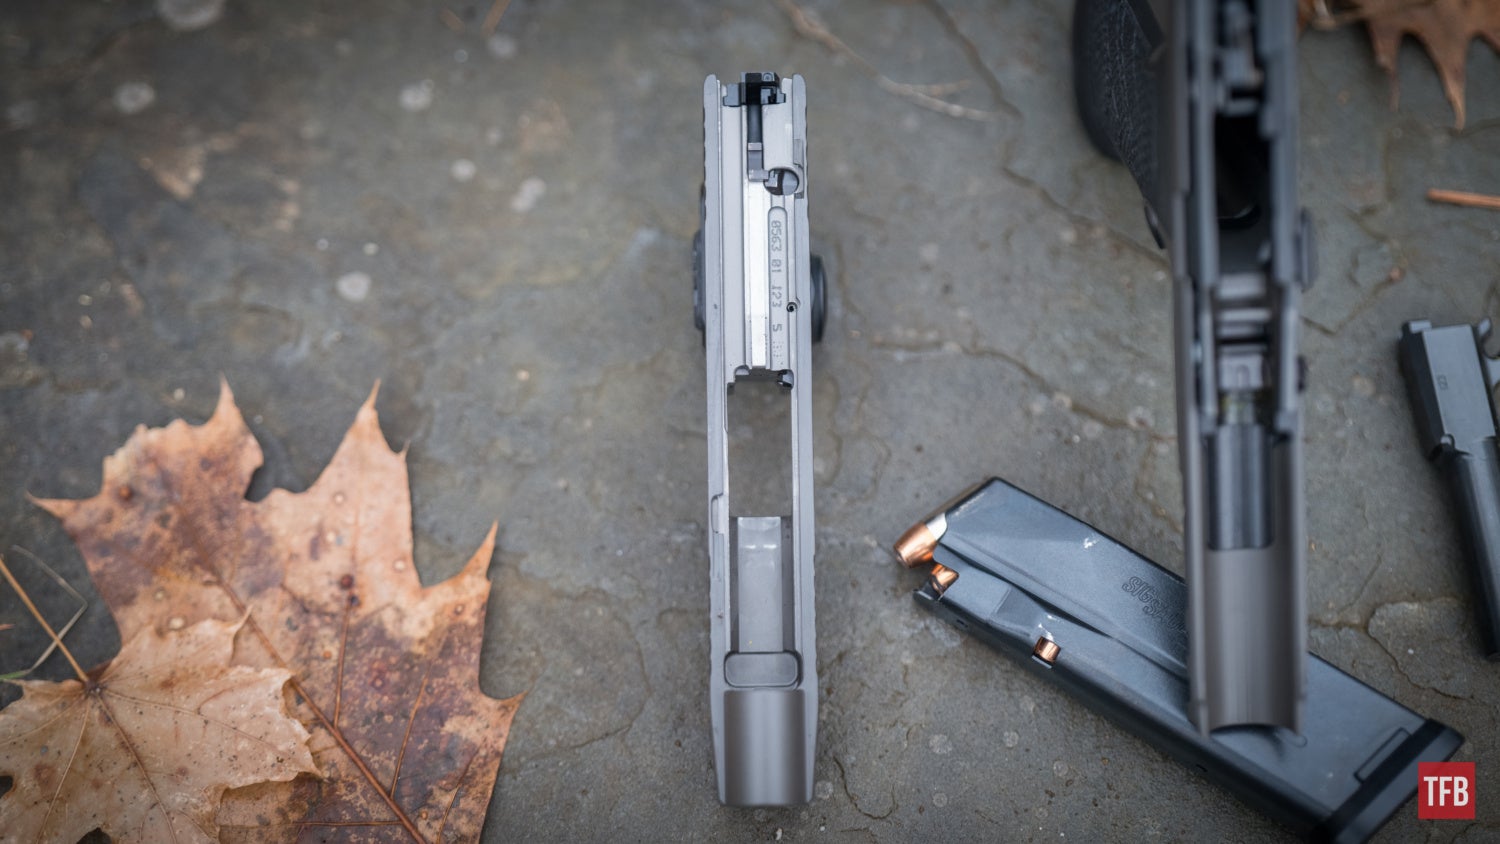 TFB REVIEW: The P365-AXG LEGION - Alloy Frame Ultra Compact EDC Pistol